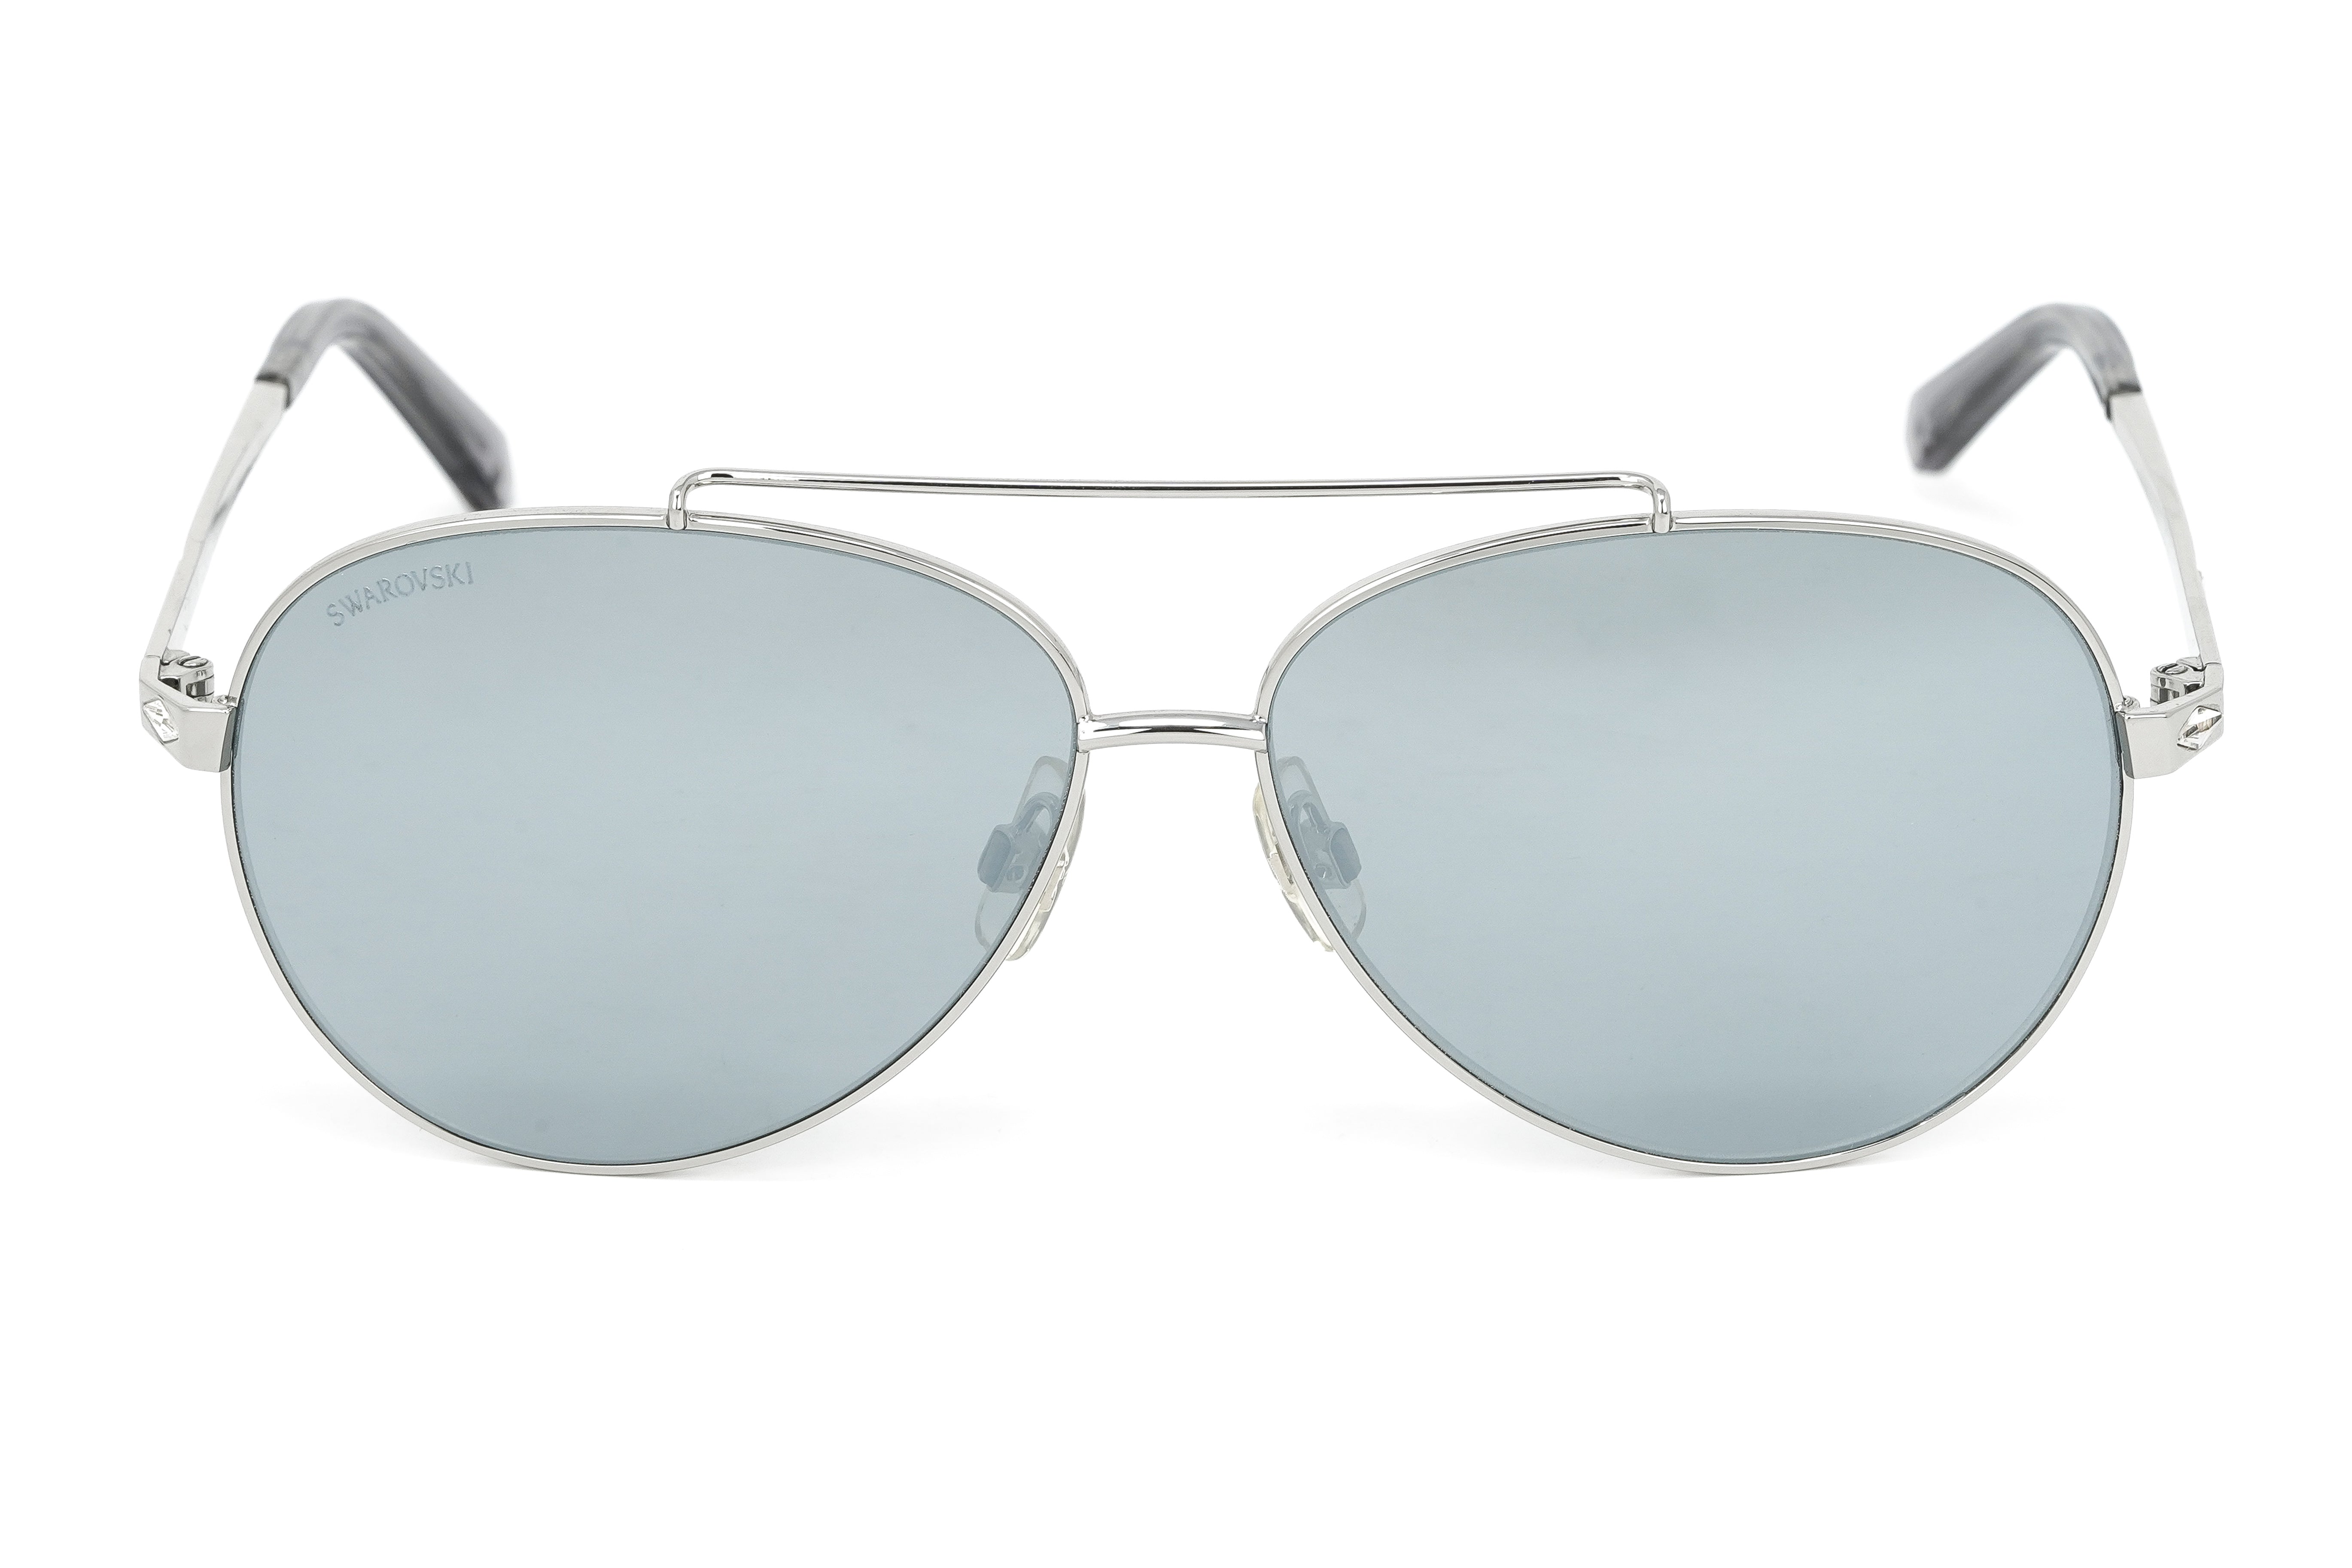 Swarovski Unisex Sunglasses Pilot Silver Mirrored Grey SK0194/S 16C